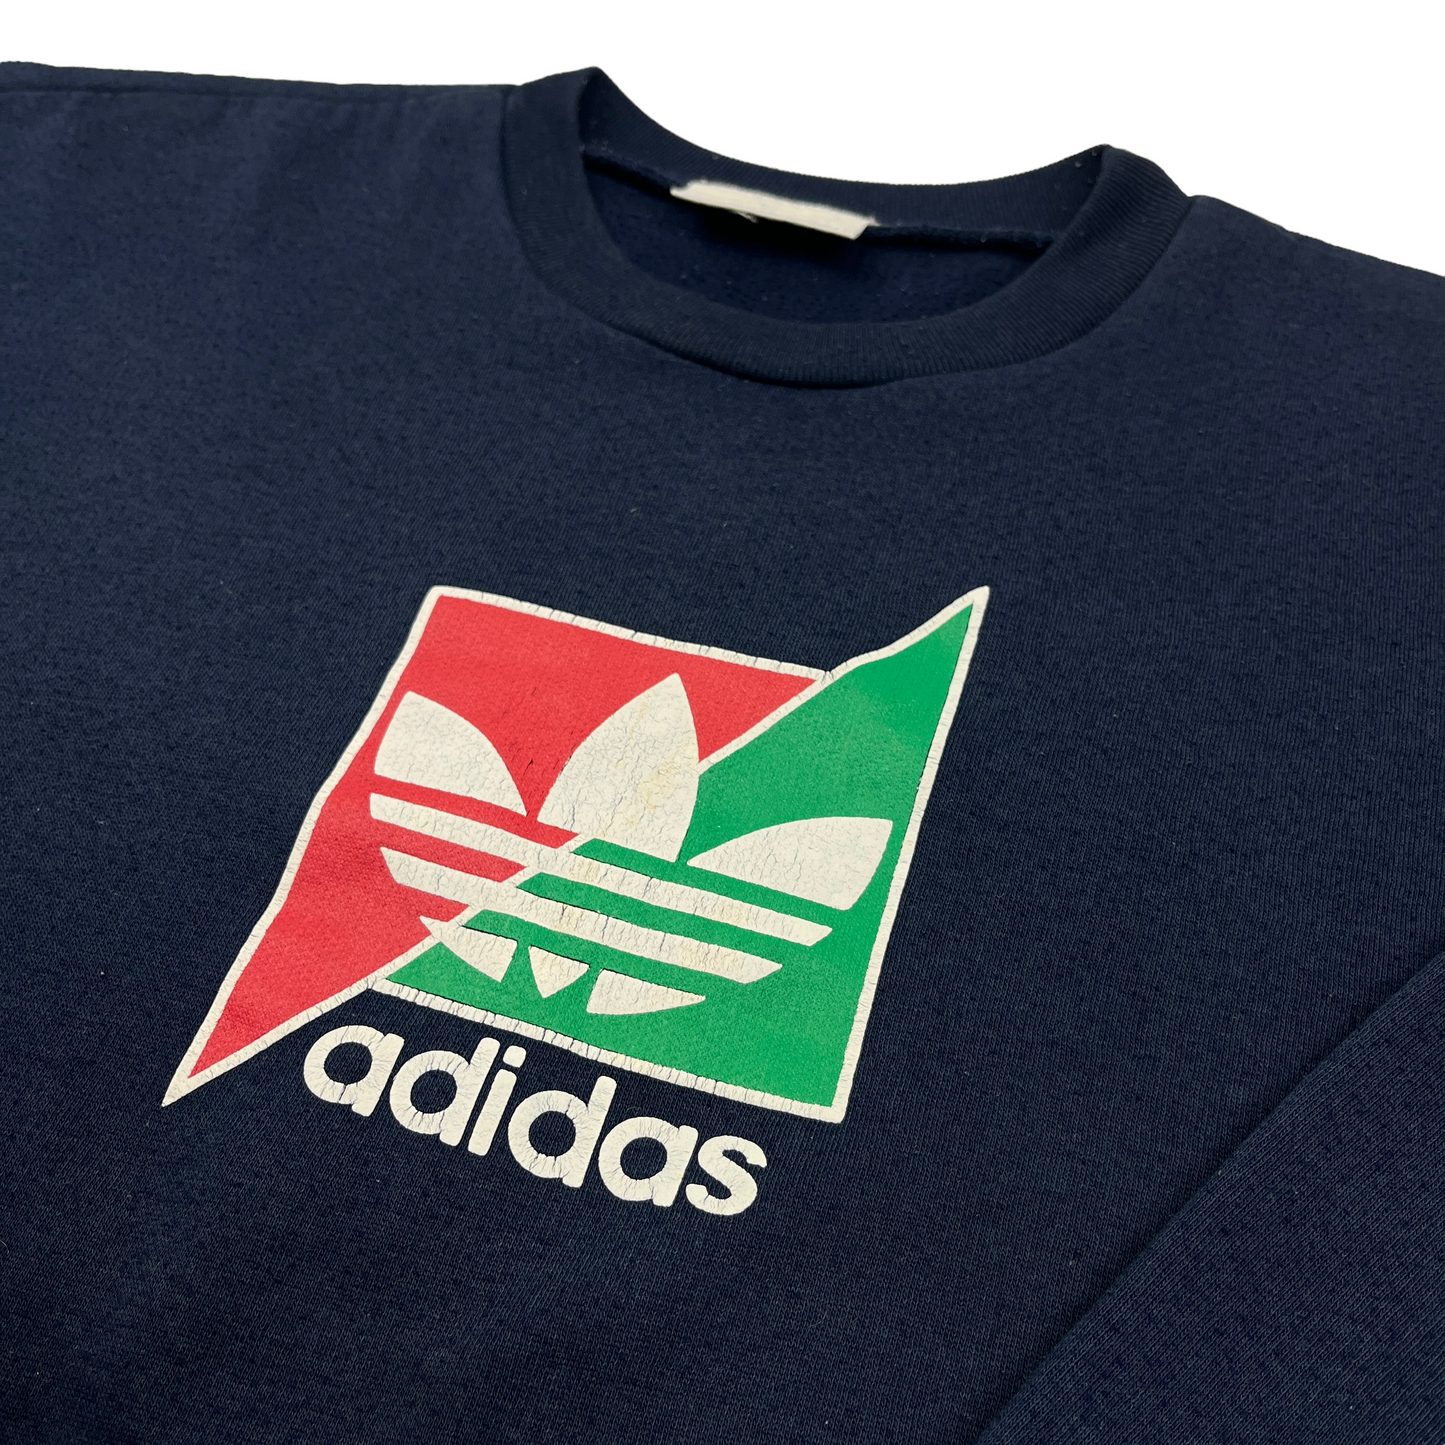 01909 Adidas 90s Sweater